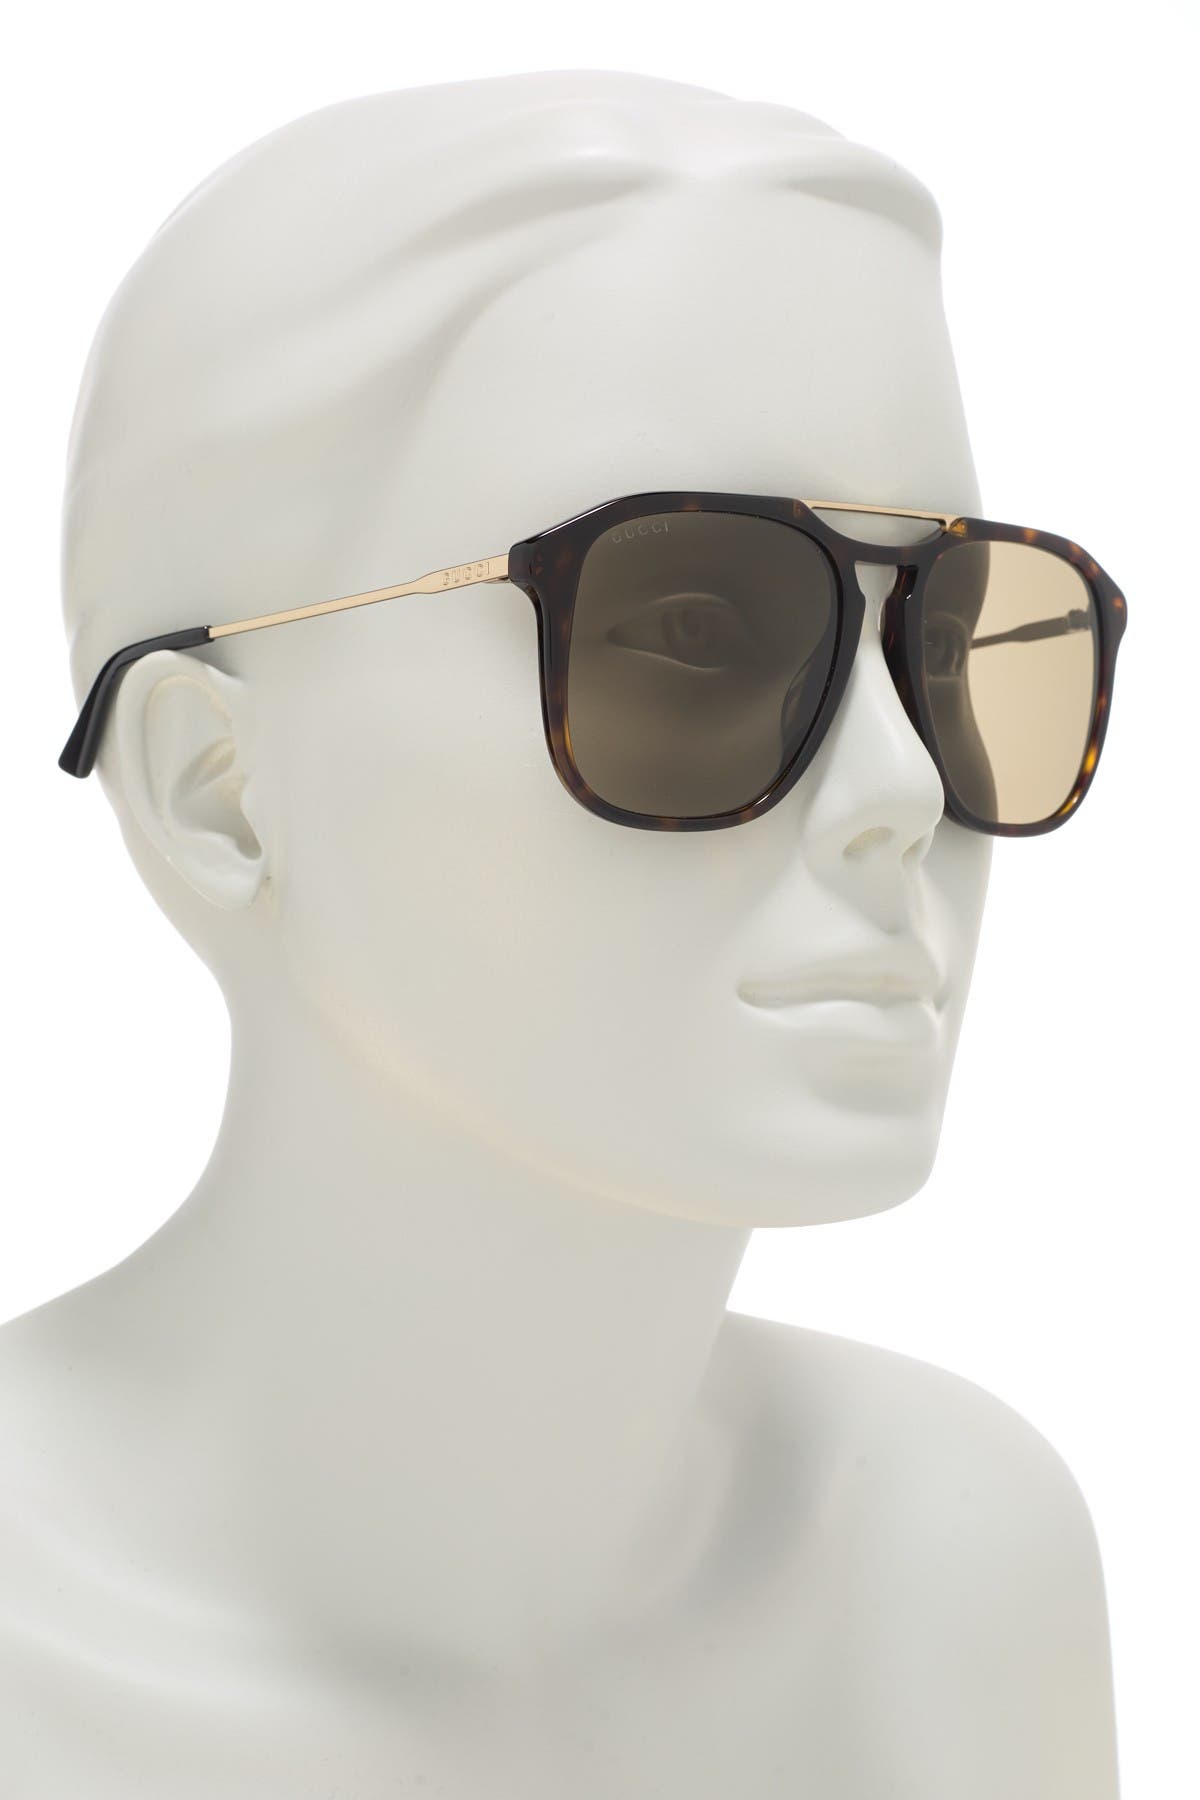 GUCCI | 55mm Brow Bar Sunglasses | Nordstrom Rack